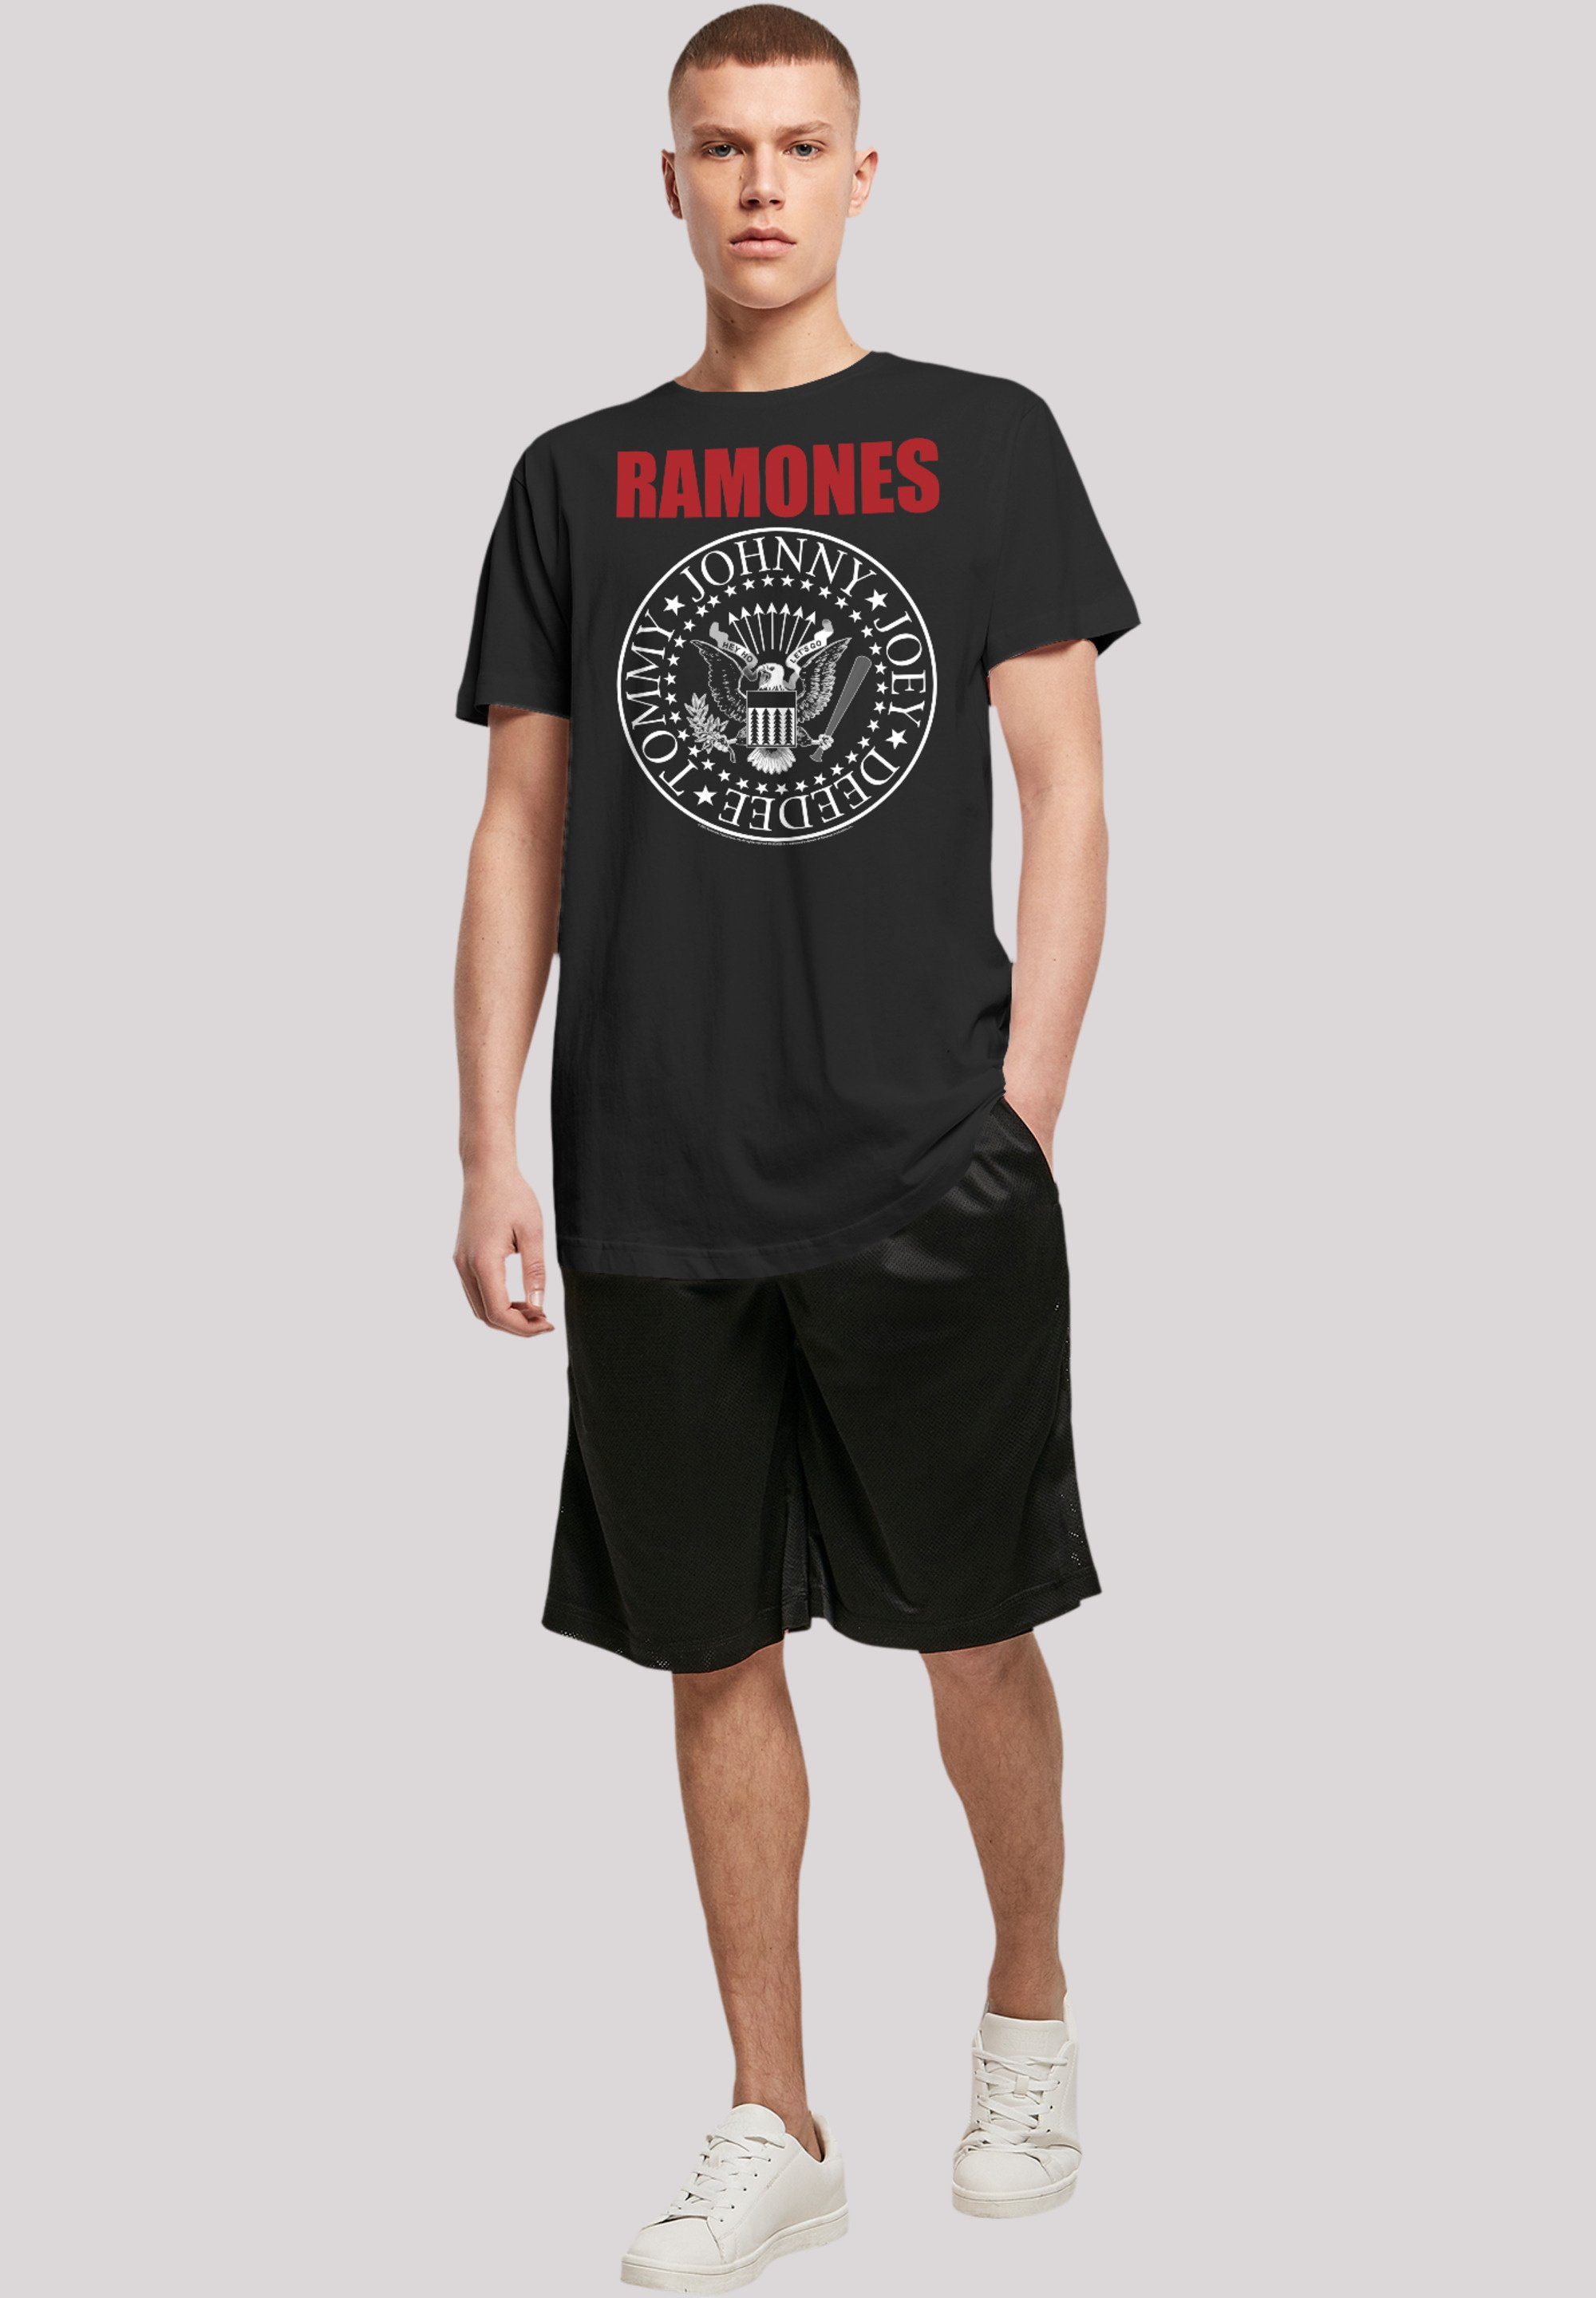 F4NT4STIC T-Shirt Seal Premium Text Band Band, Ramones Red Rock Rock-Musik Musik Qualität